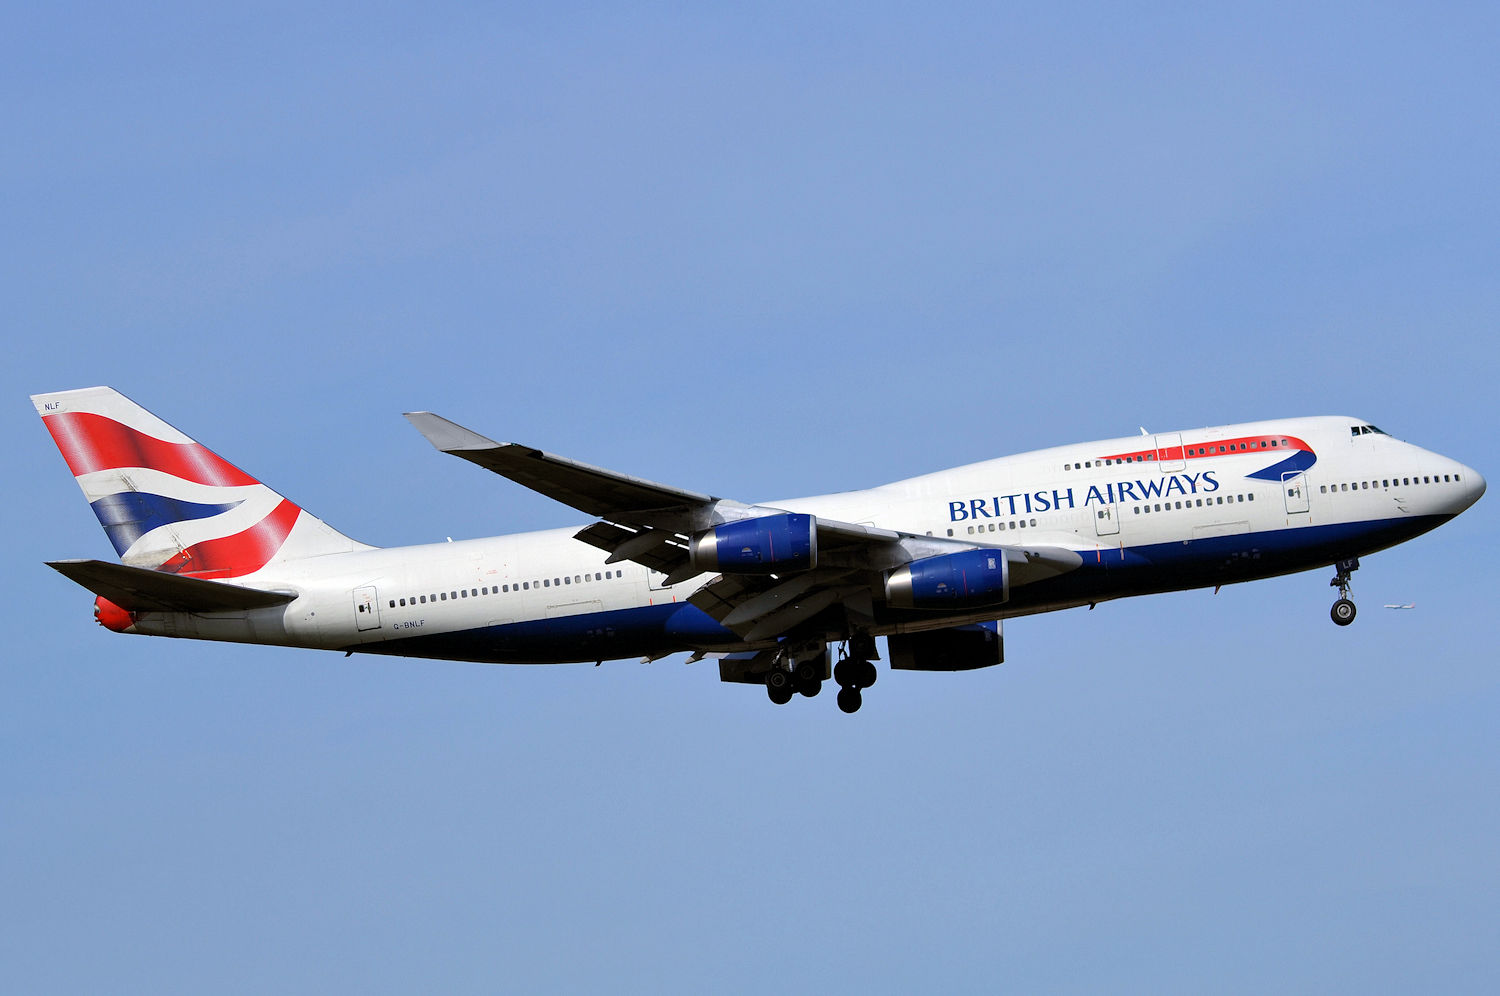 G-BNLF/GBNLF British Airways Boeing 747 Airframe Information - AVSpotters.com